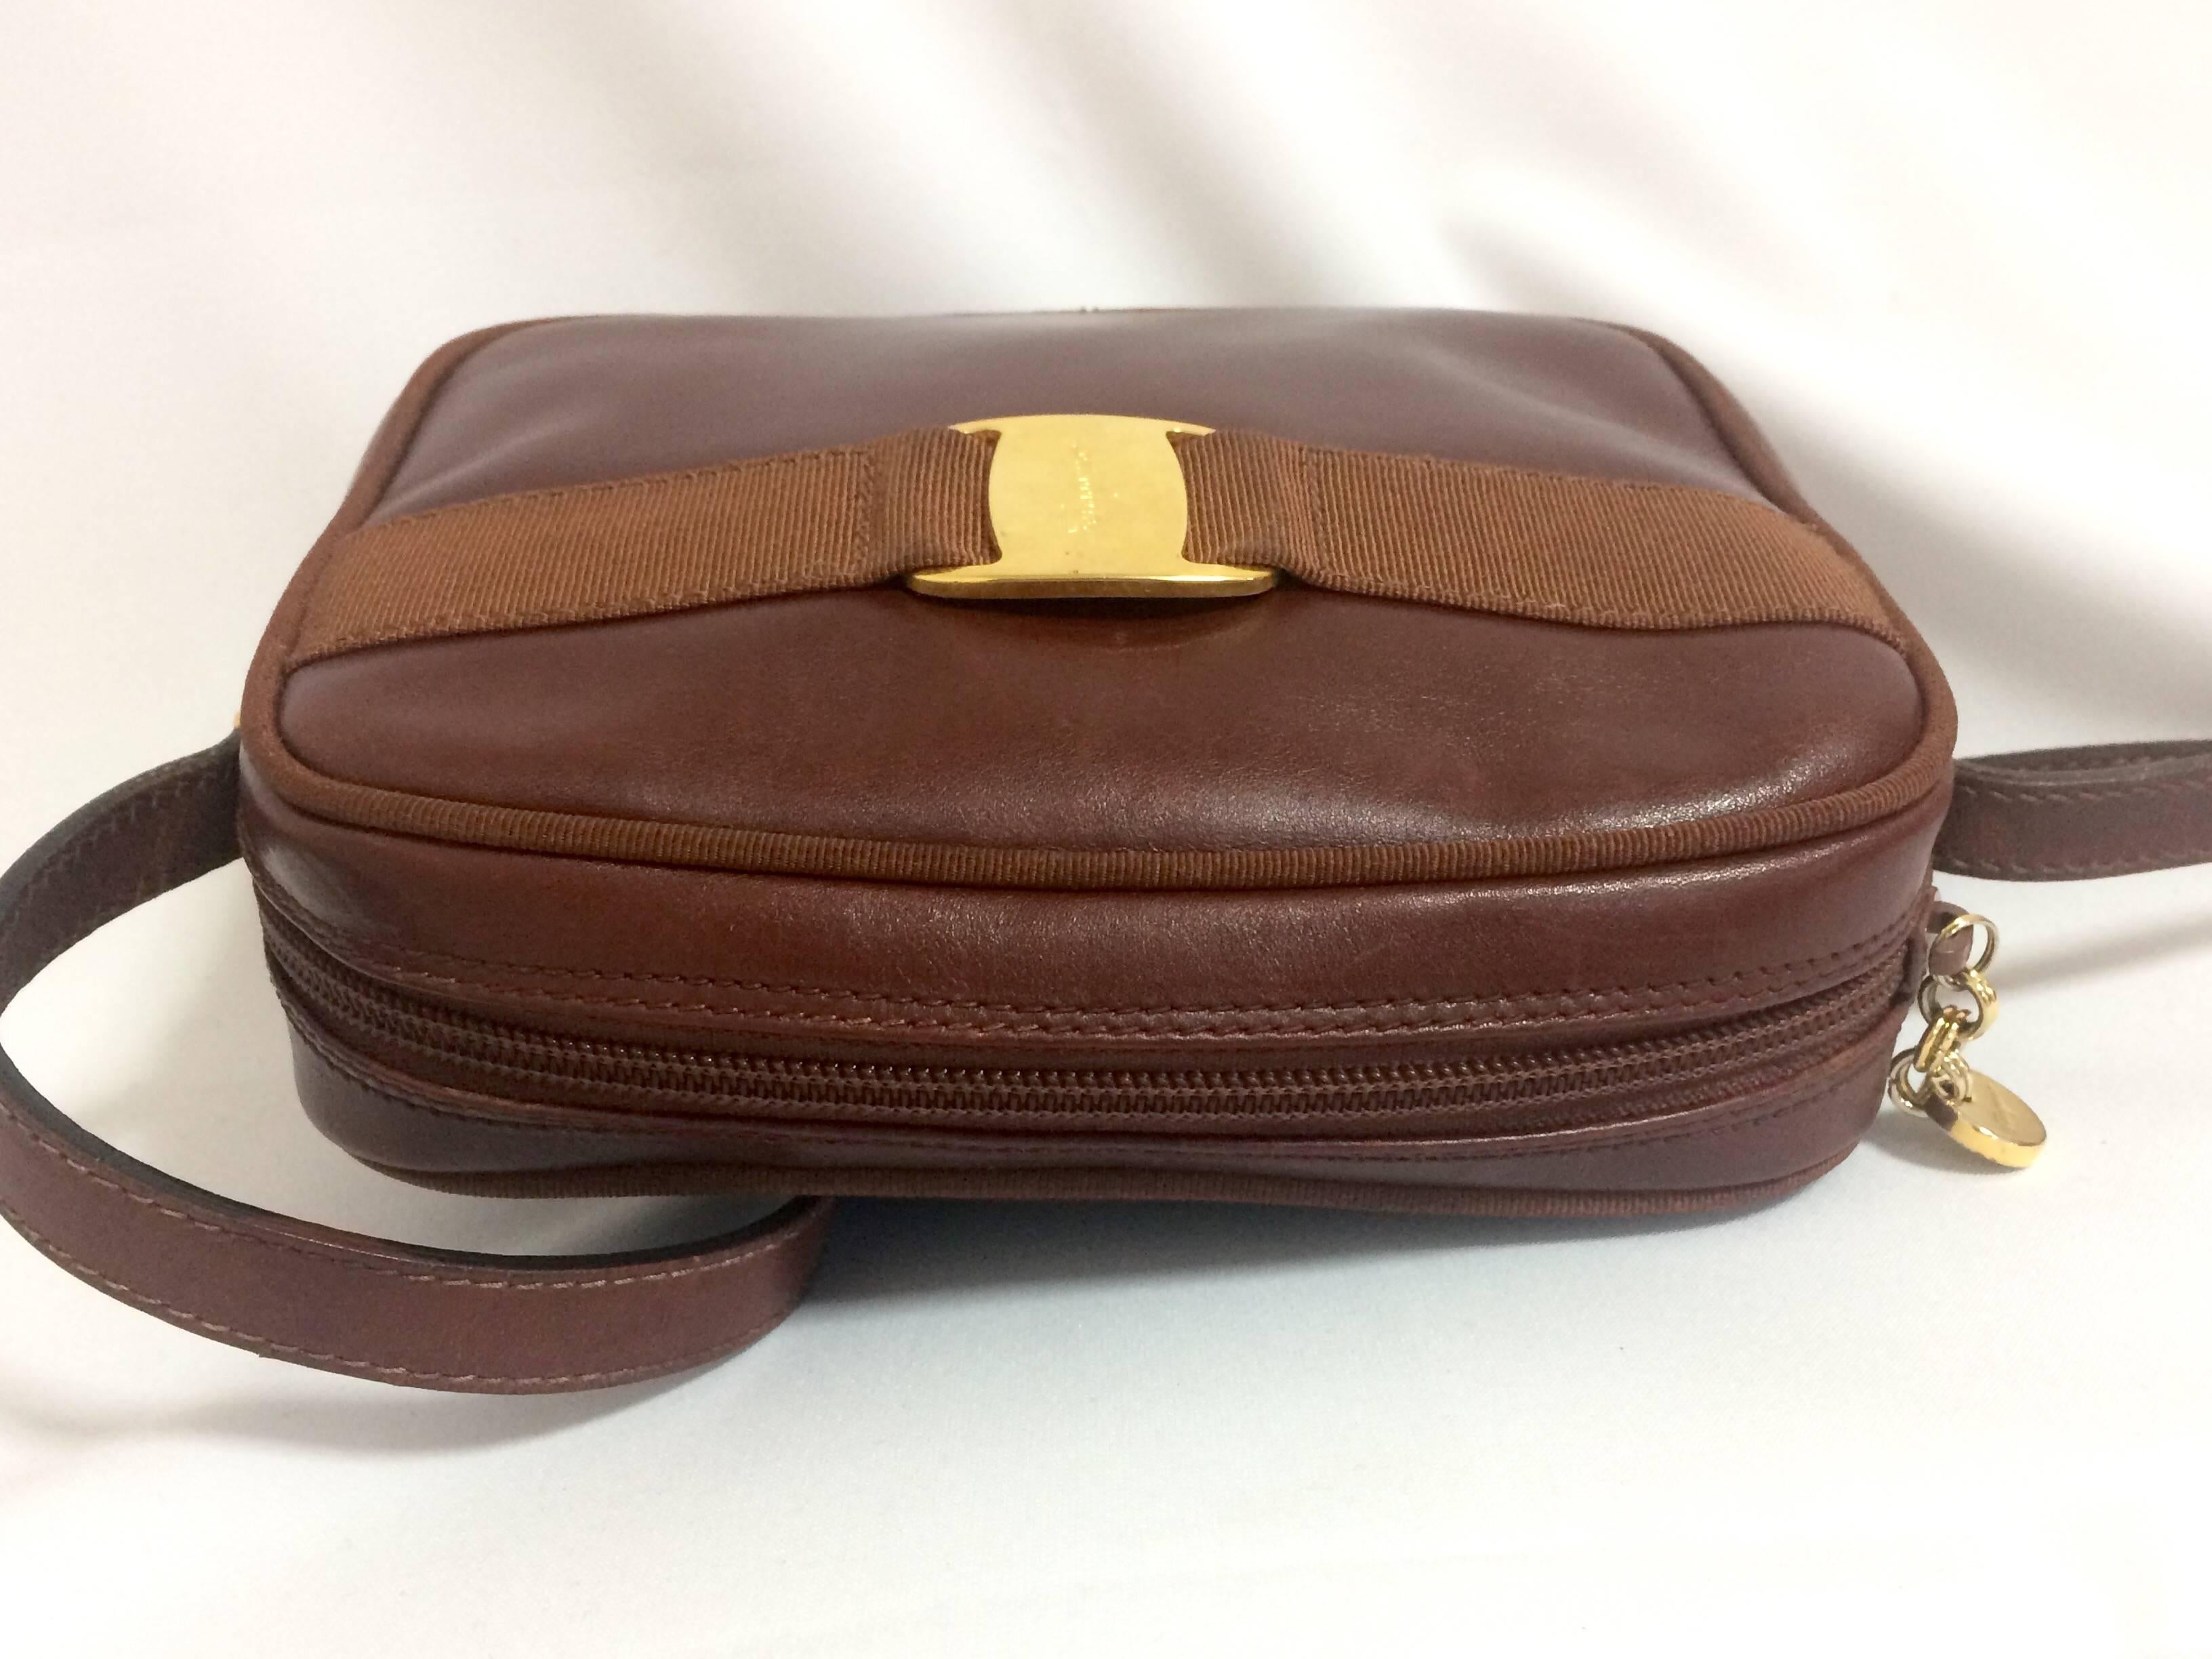 Vintage Salvatore Ferragamo vara collection brown leather purse with logo motif. 1